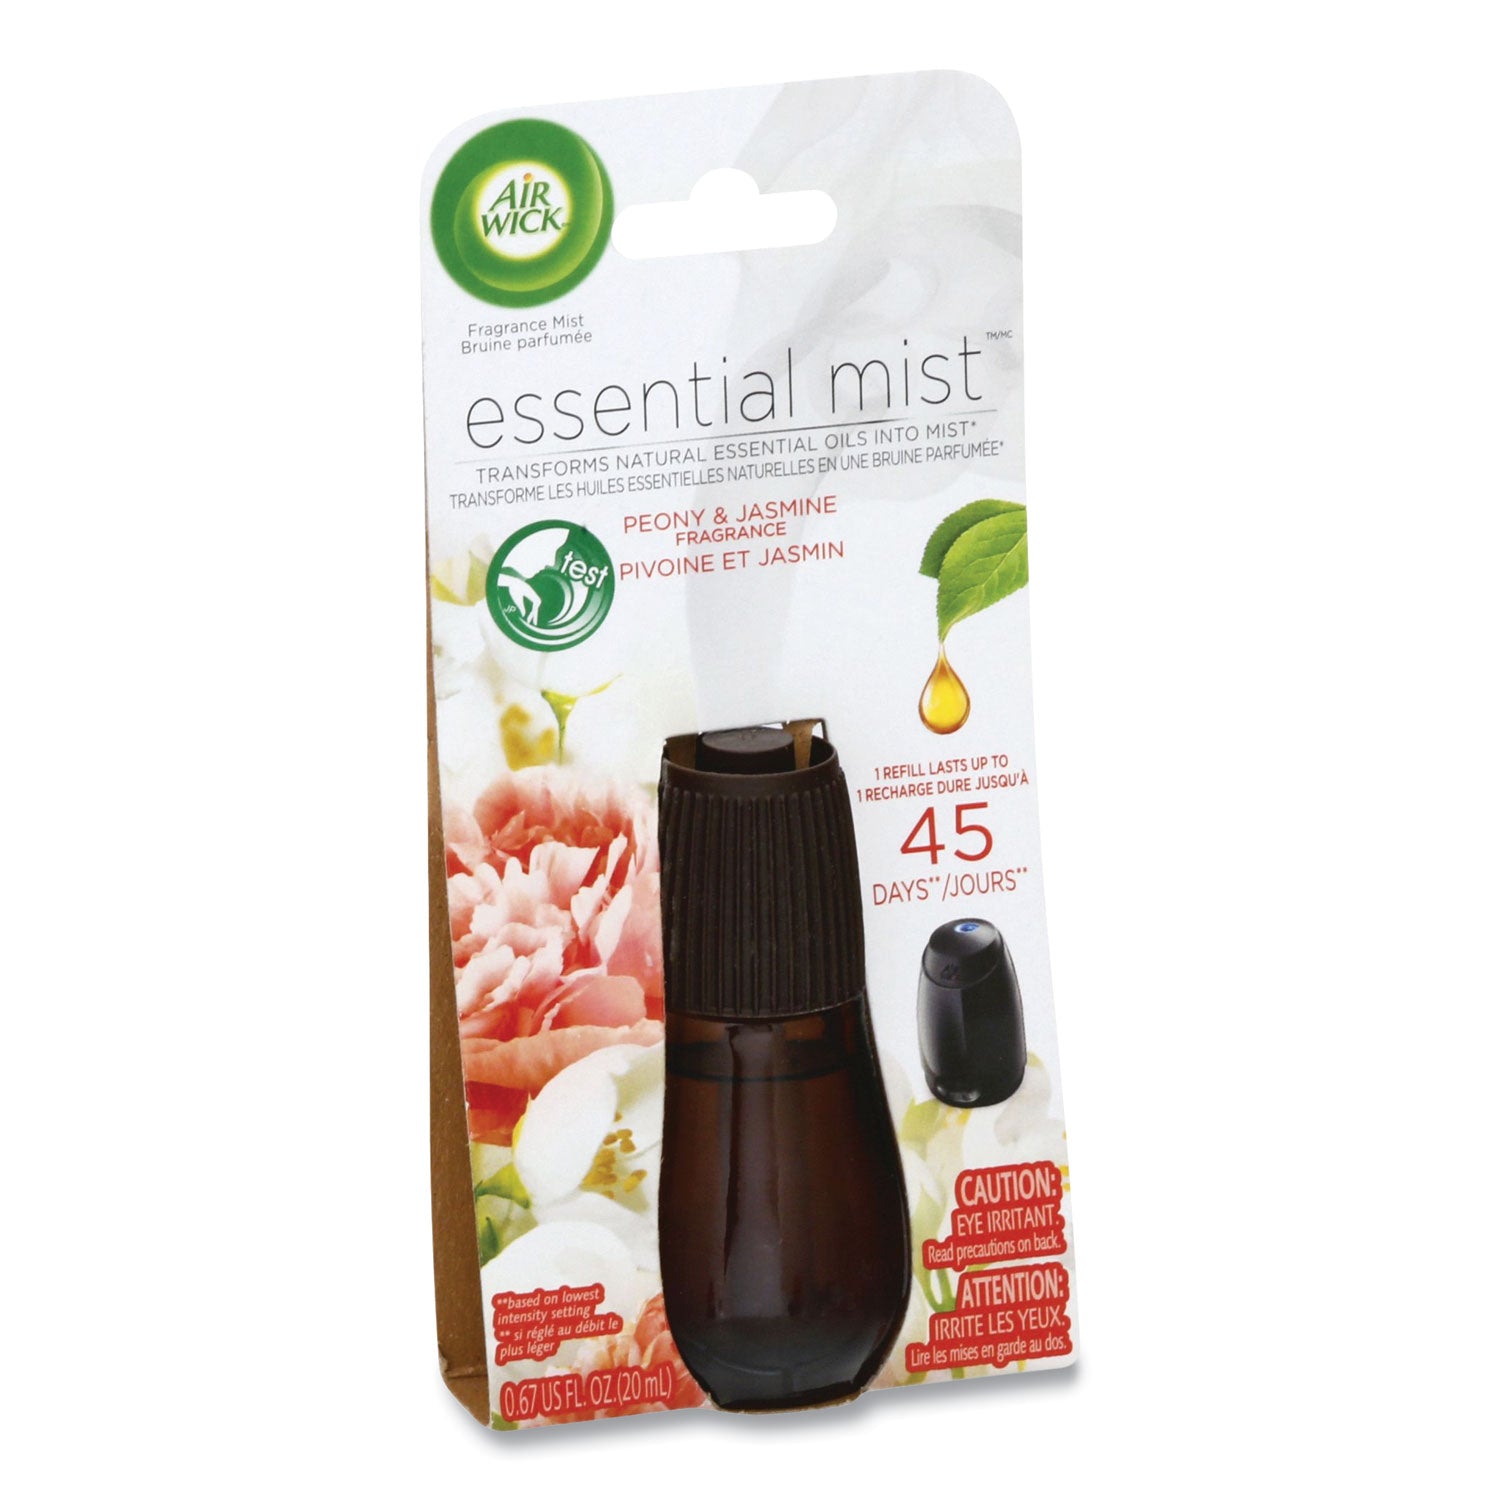 essential-mist-refill-peony-and-jasmine-067-oz-bottle-6-carton_rac98555 - 2